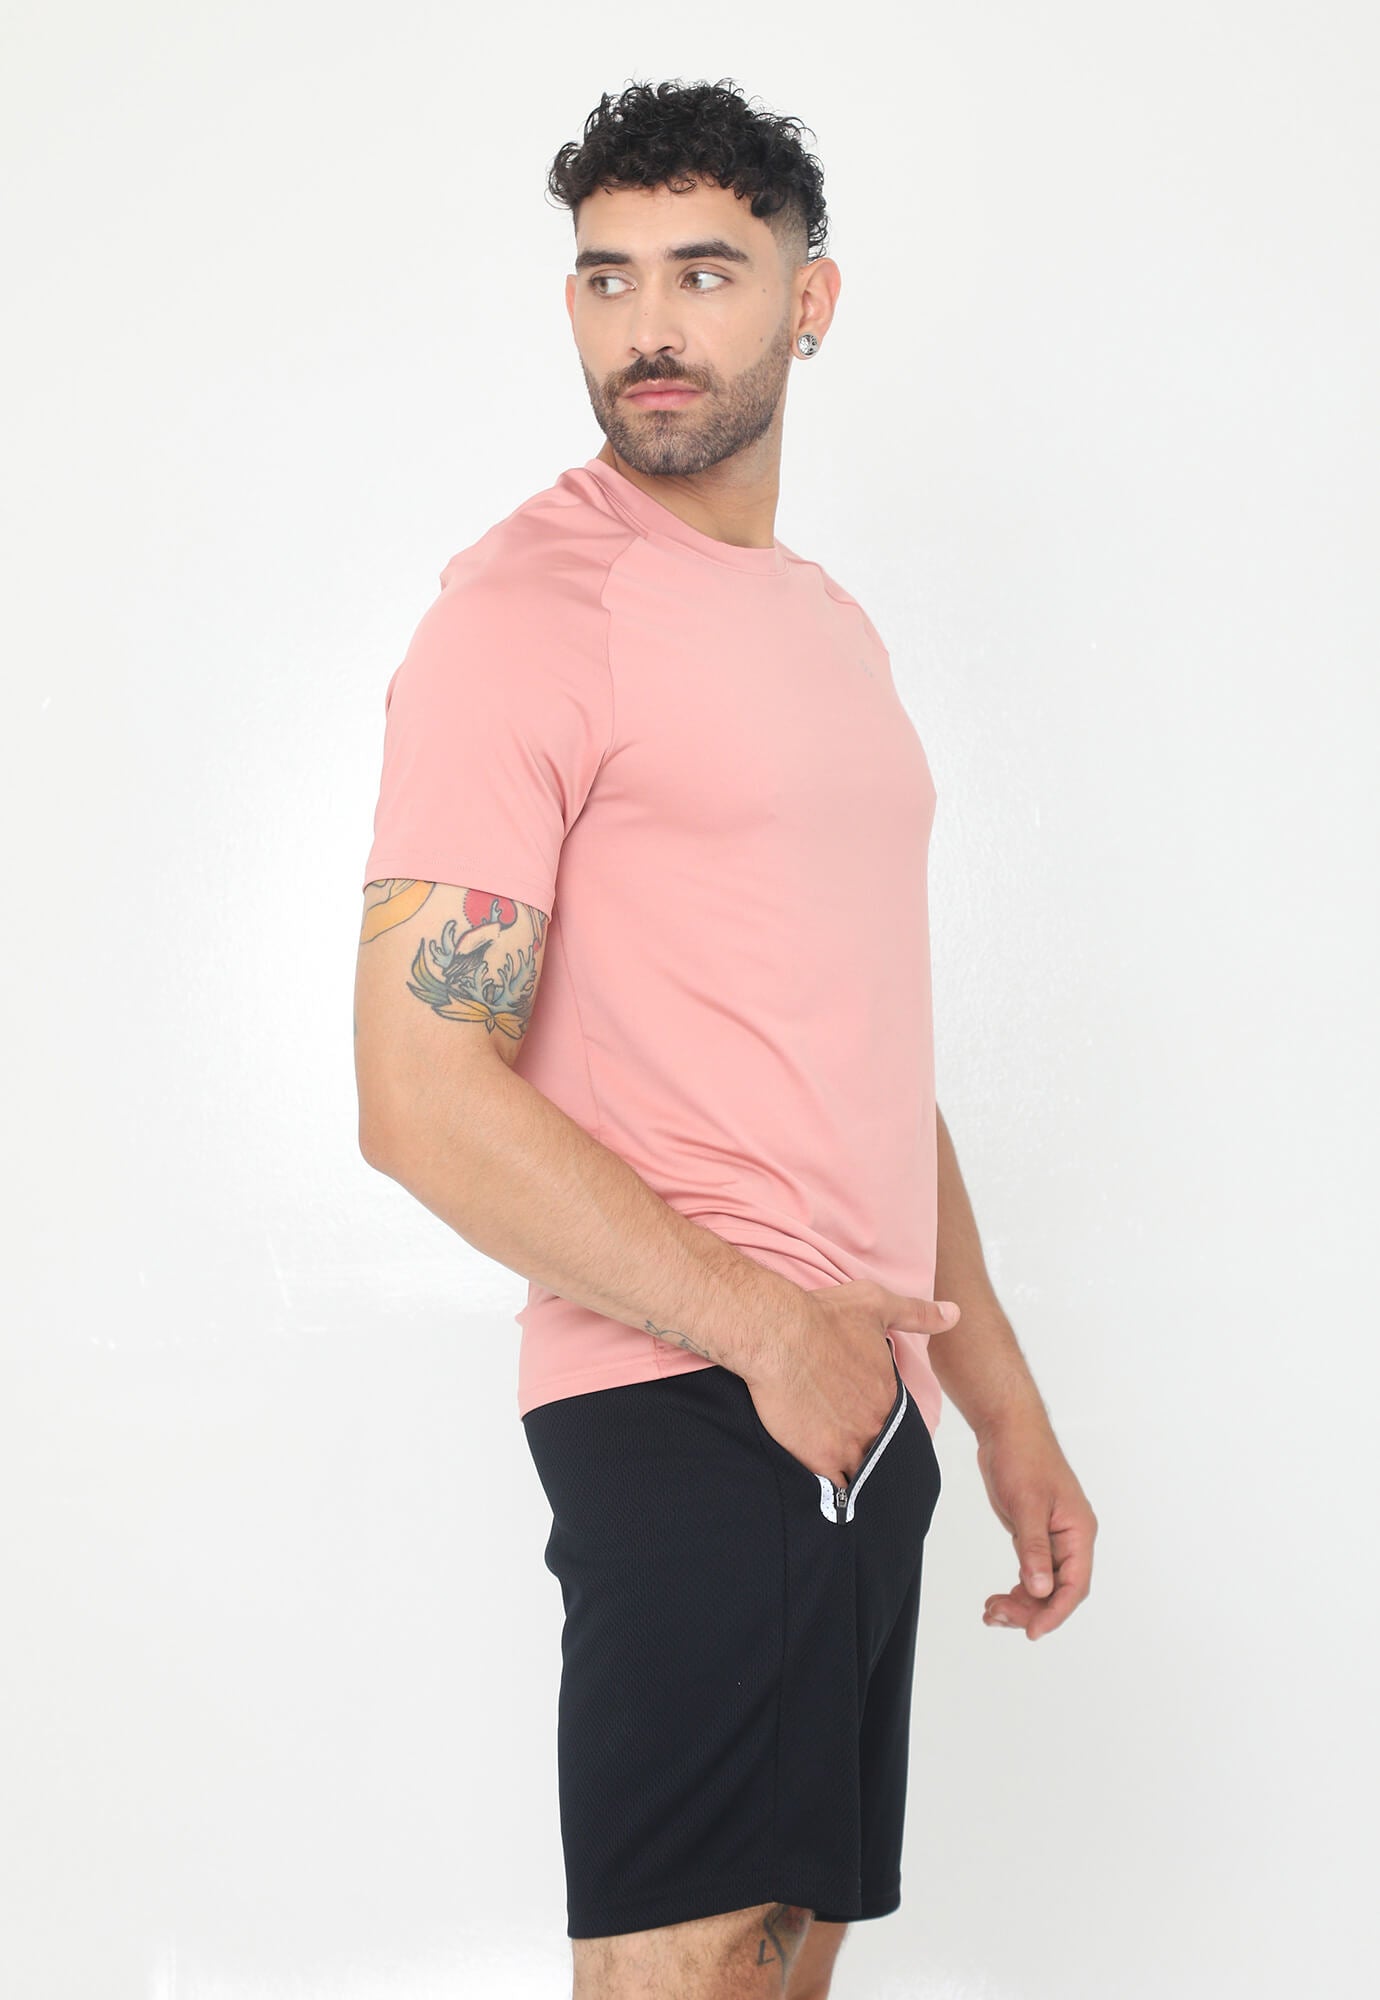 Camiseta deportiva rosa manga corta silueta semi-ajustada con cuello redondo para hombre